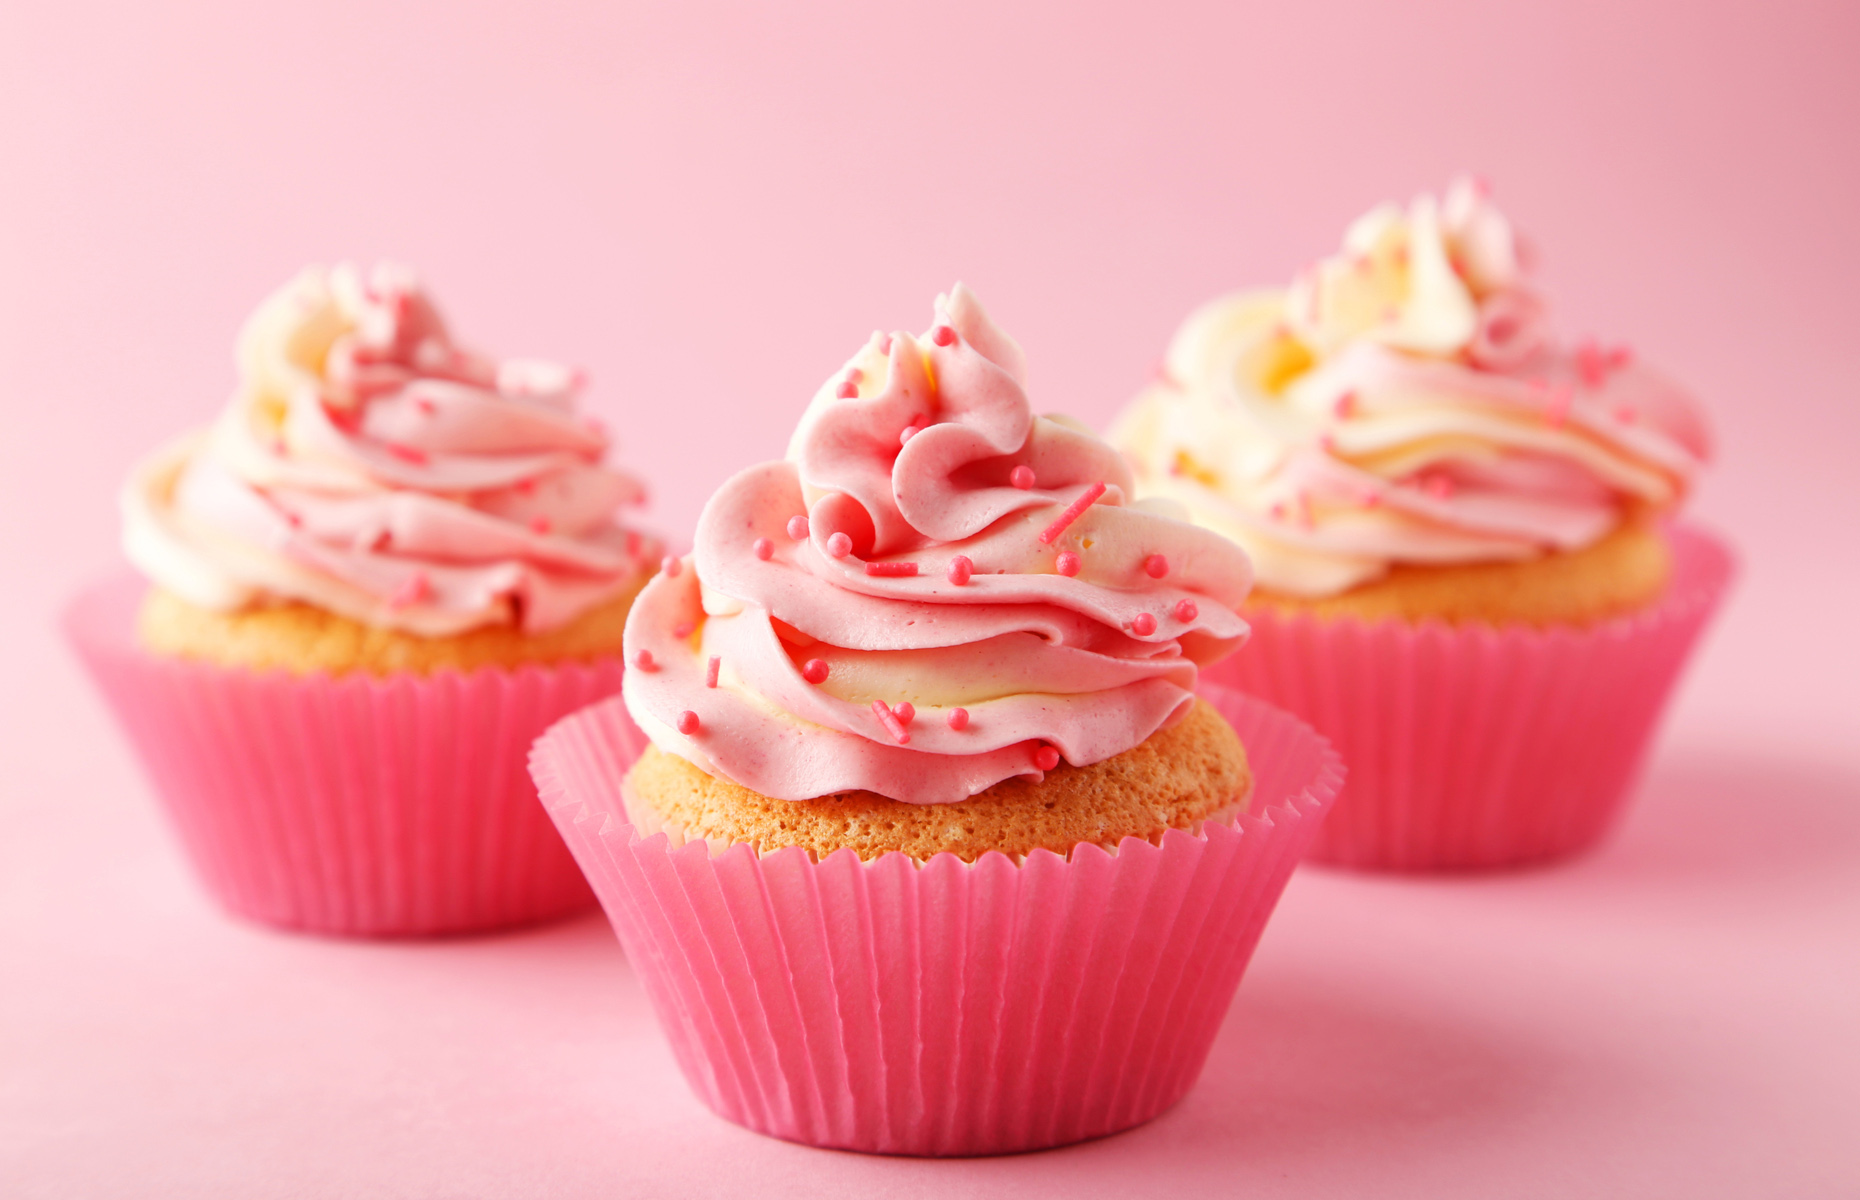 Mary Berry vanilla cupcakes with swirly icing (Image: Studio/Shutterstock)